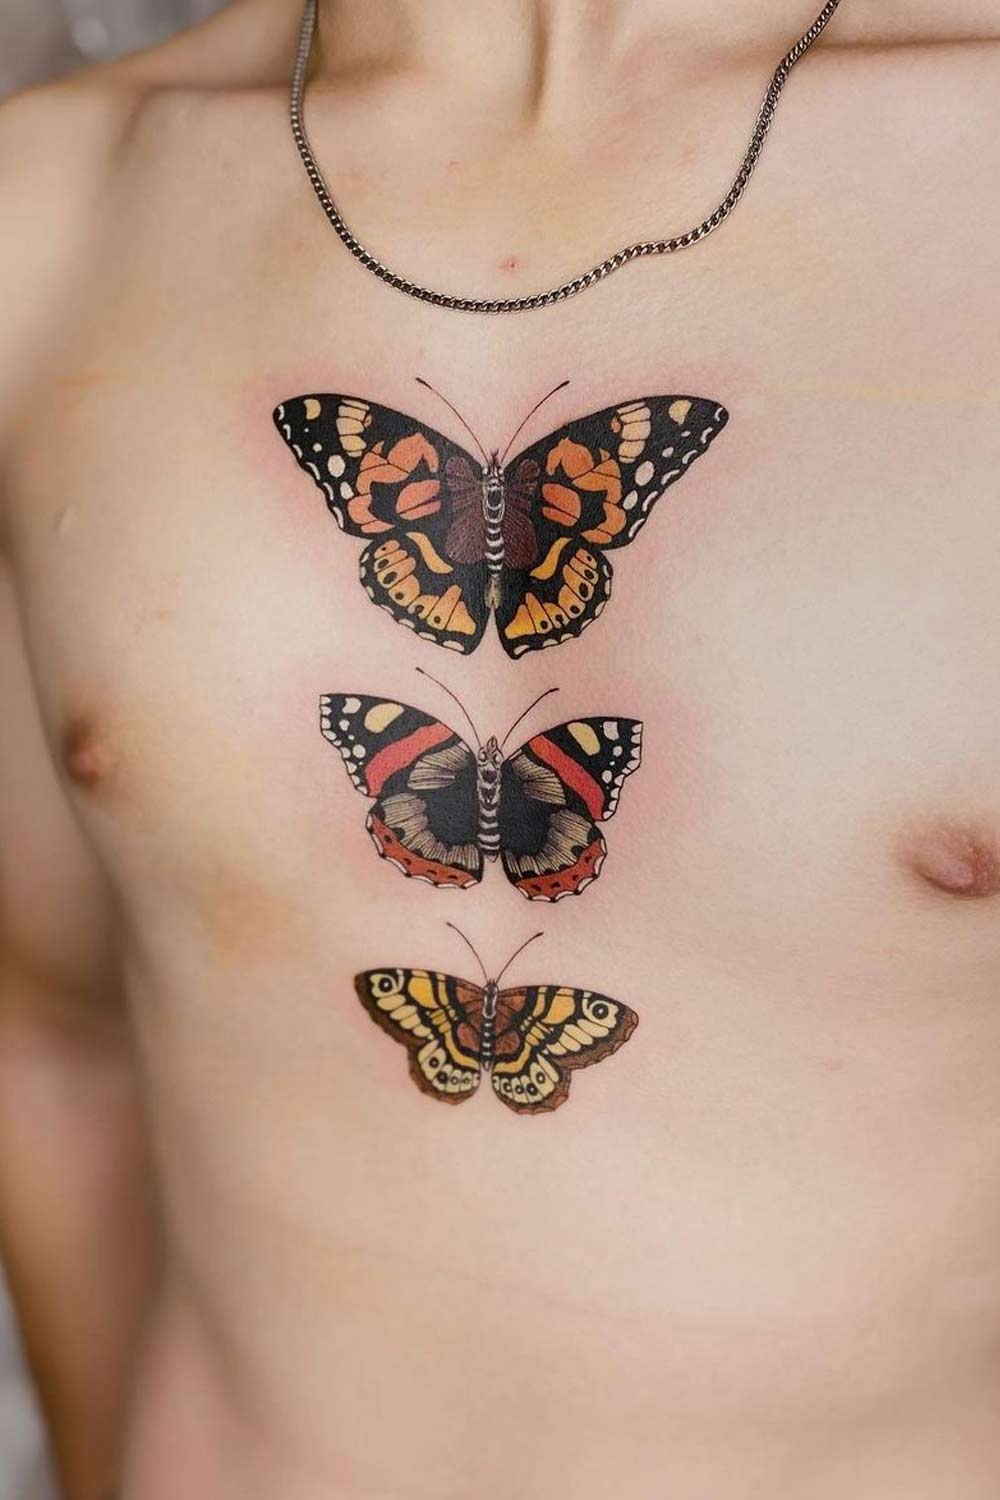 Male Butterfly Tattoo Design